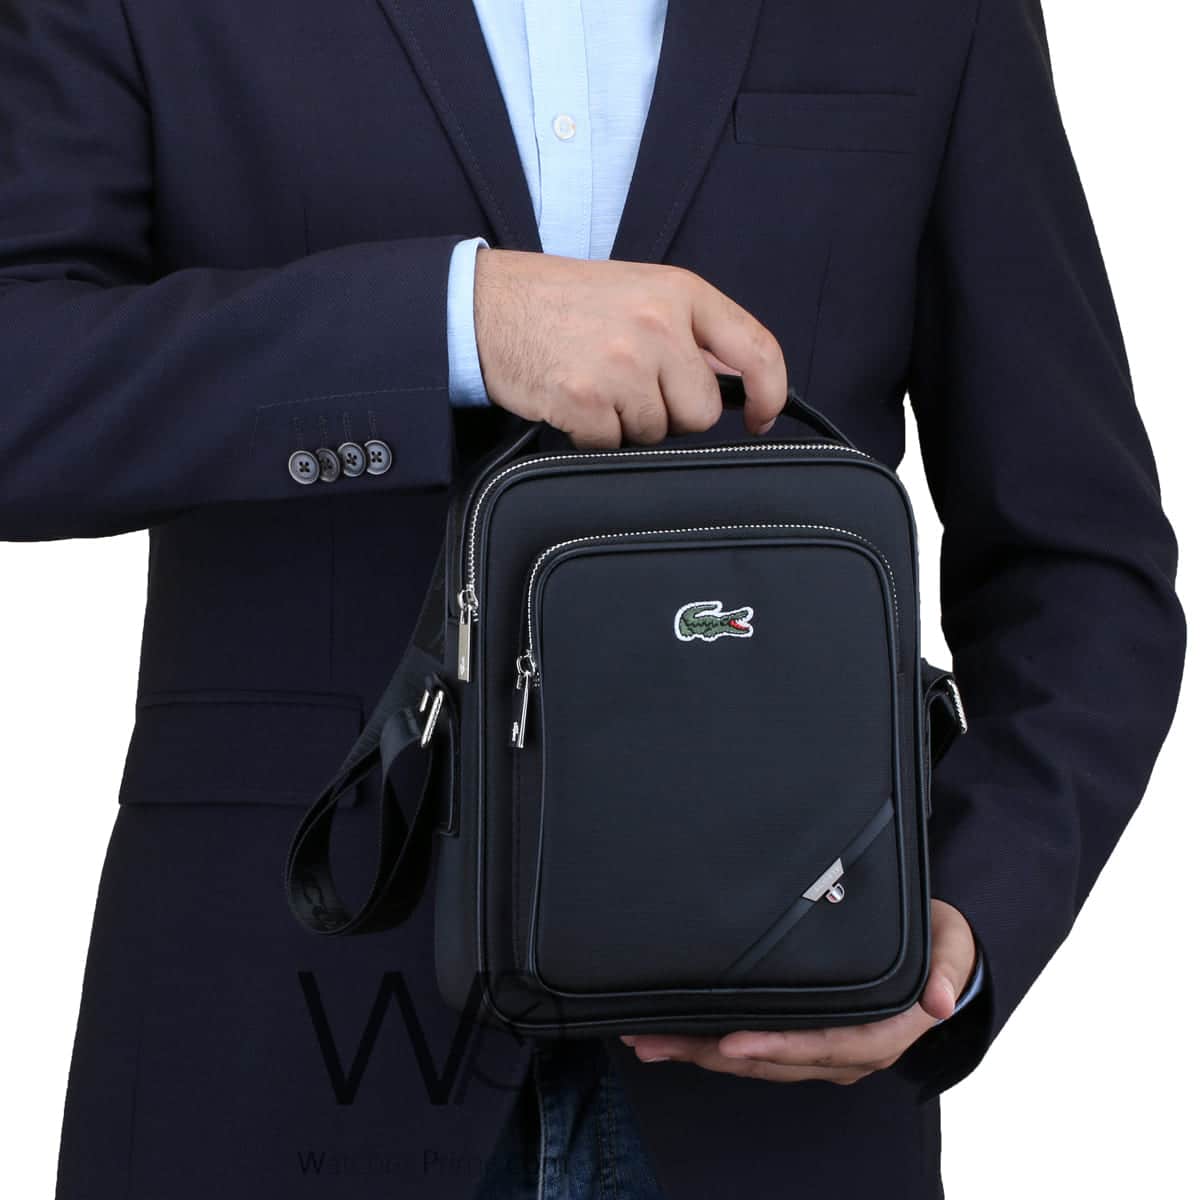 Lacoste Crossbody Messenger Bag For Men | Watches Prime